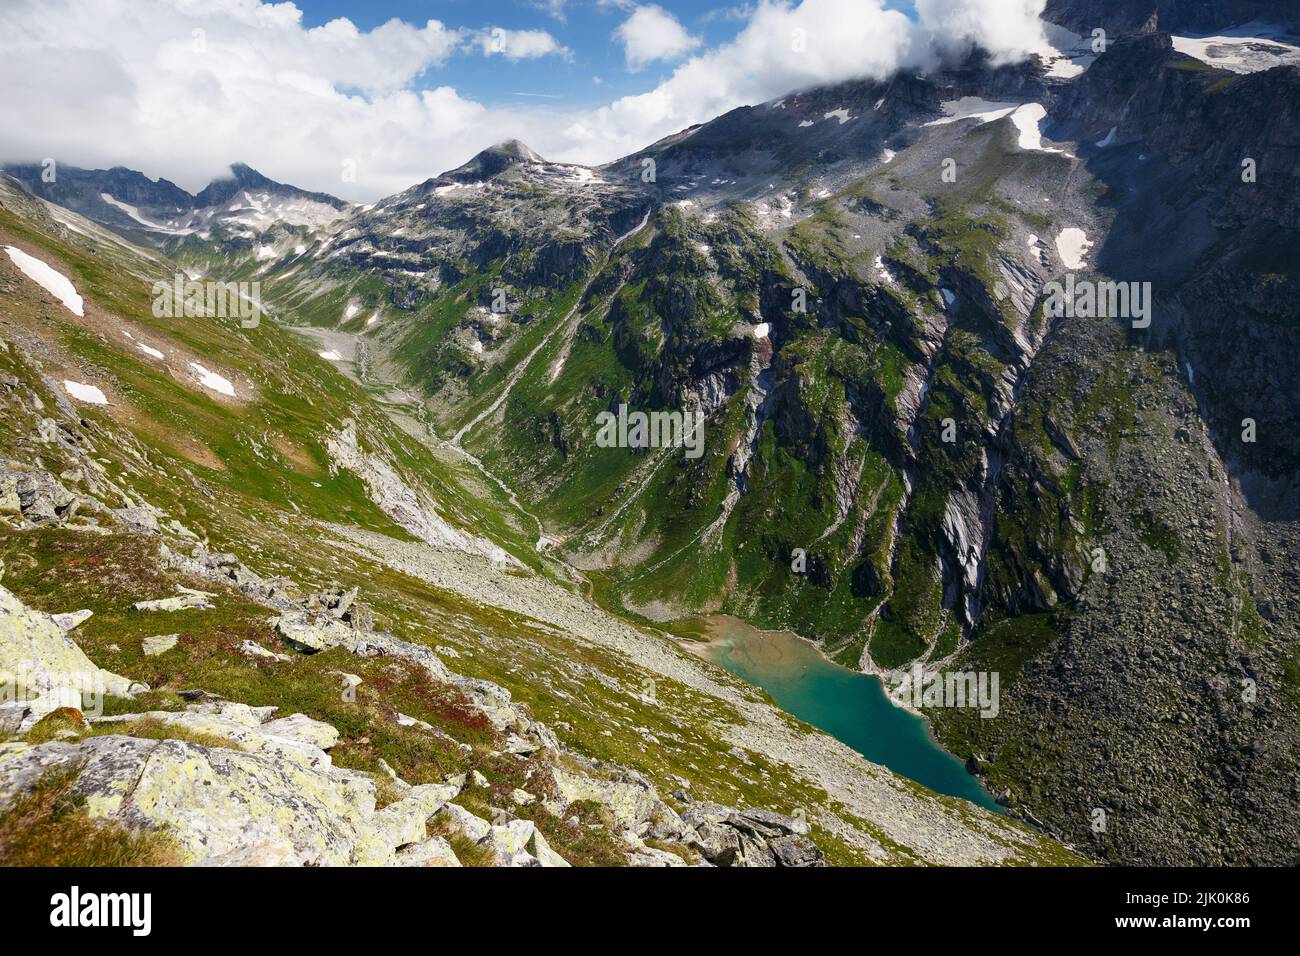 Valle alpino Dorfertal, vista sobre el lago Dorfer. Osttirol. Parque Nacional de Hohe Tauern. Alpes austríacos. Europa. Foto de stock